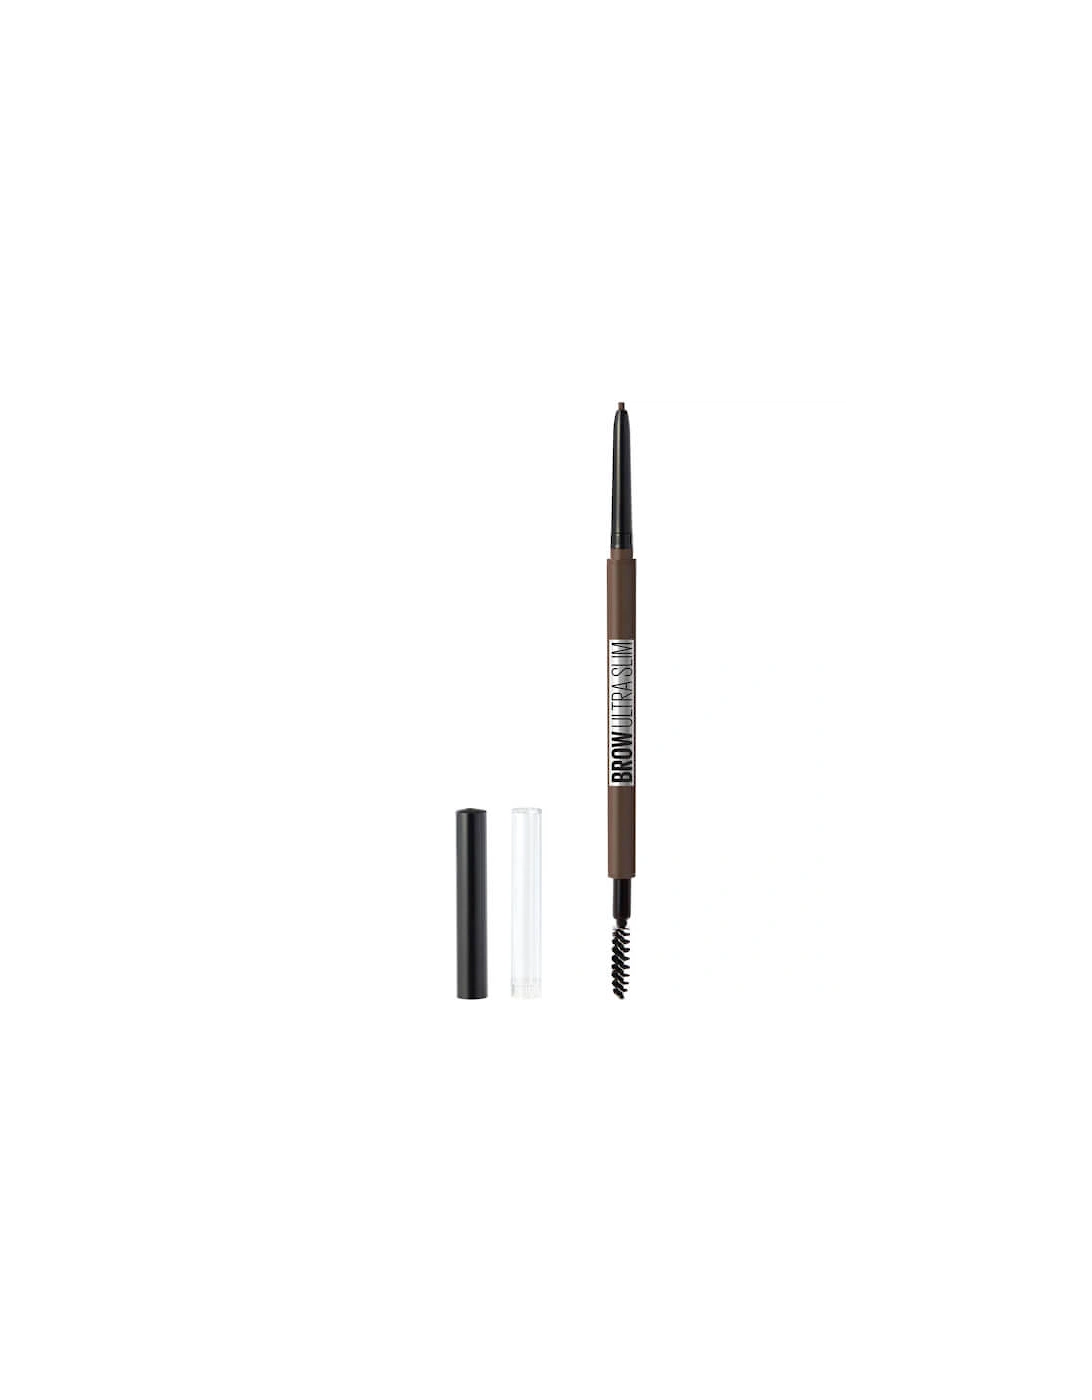 Express Brow Ultra Slim Defining Natural Fuller Looking Brows Eyebrow Pencil - 05 Deep Brown, 2 of 1